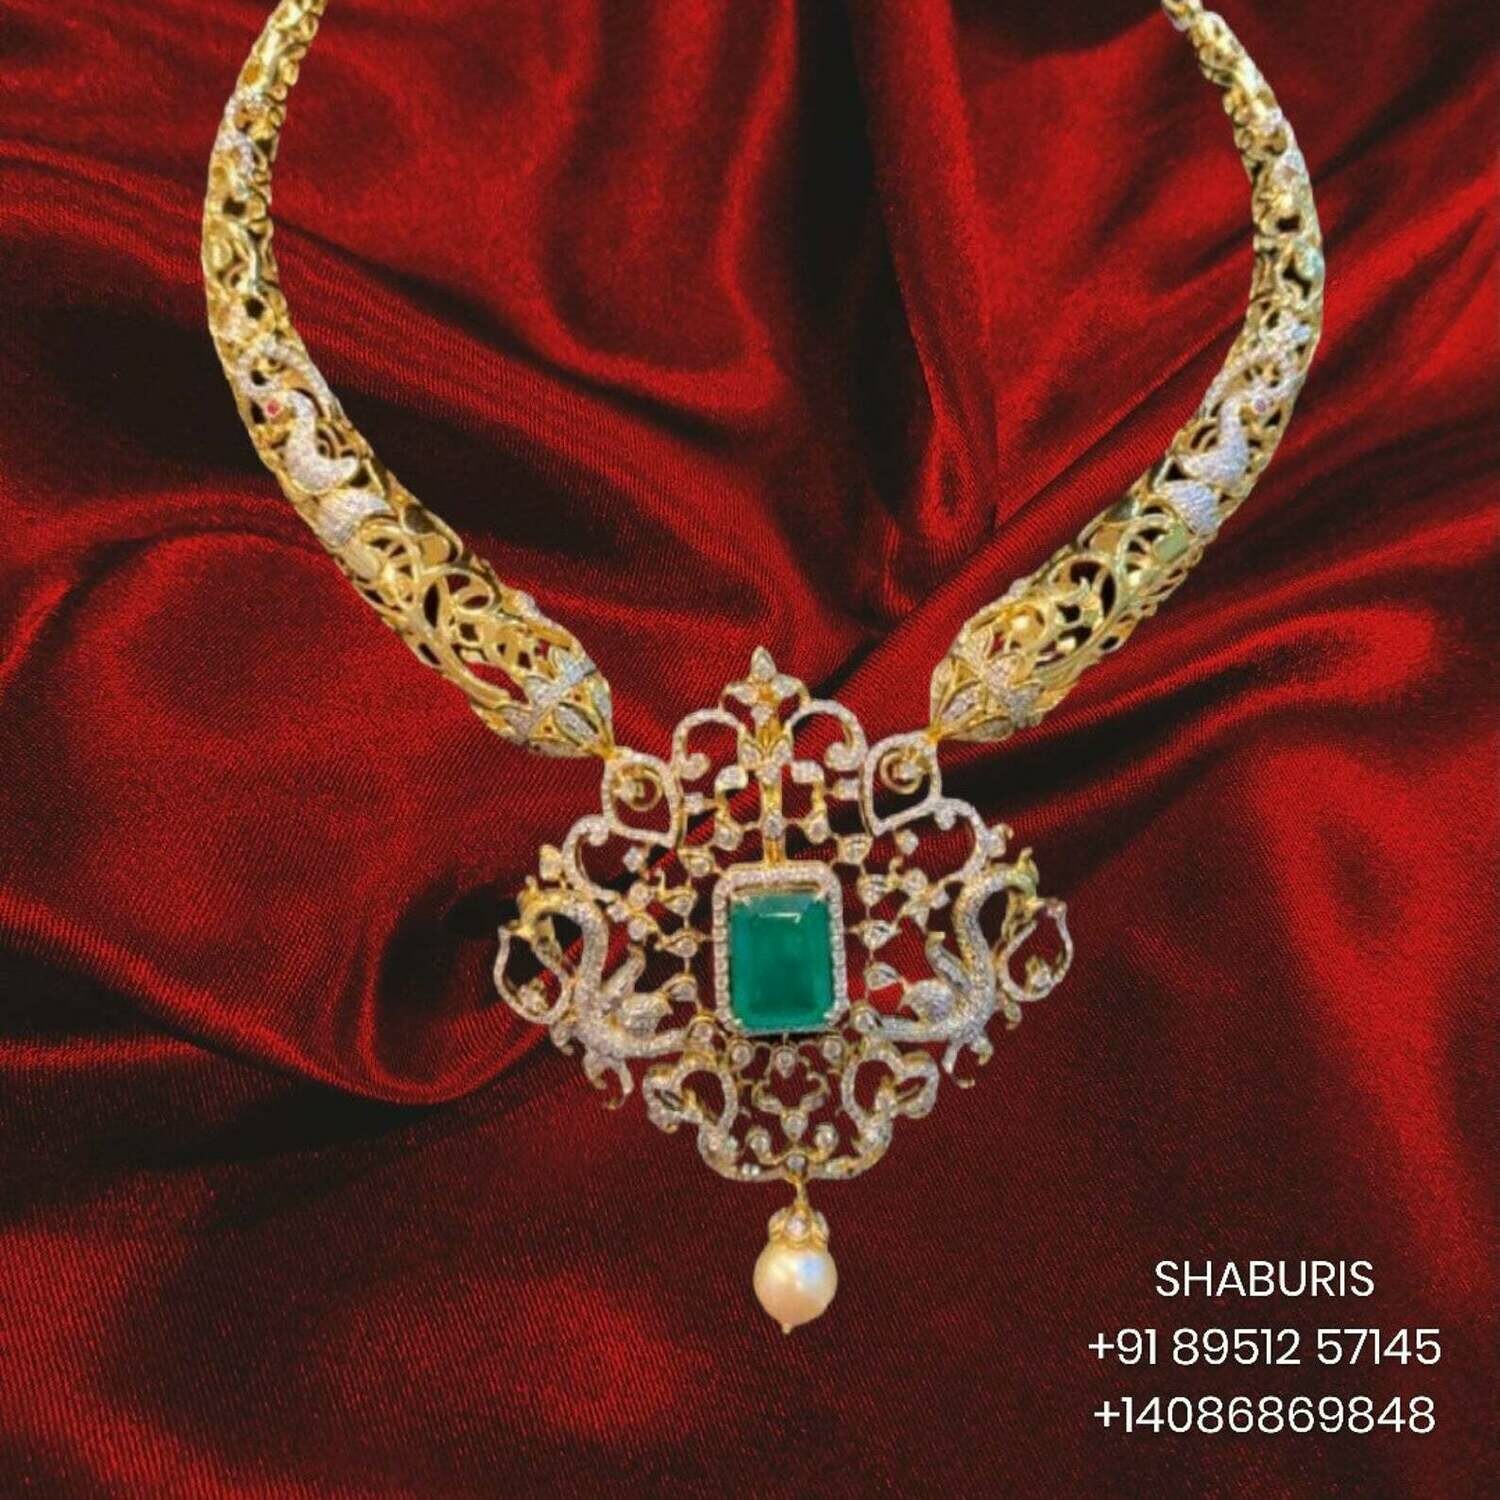 Detatchable diamond kante ,South Indian Jewellery,South Indian Jewelry,Kante Necklace,silver jewelry Designs - NIHIRA-SHABURIS